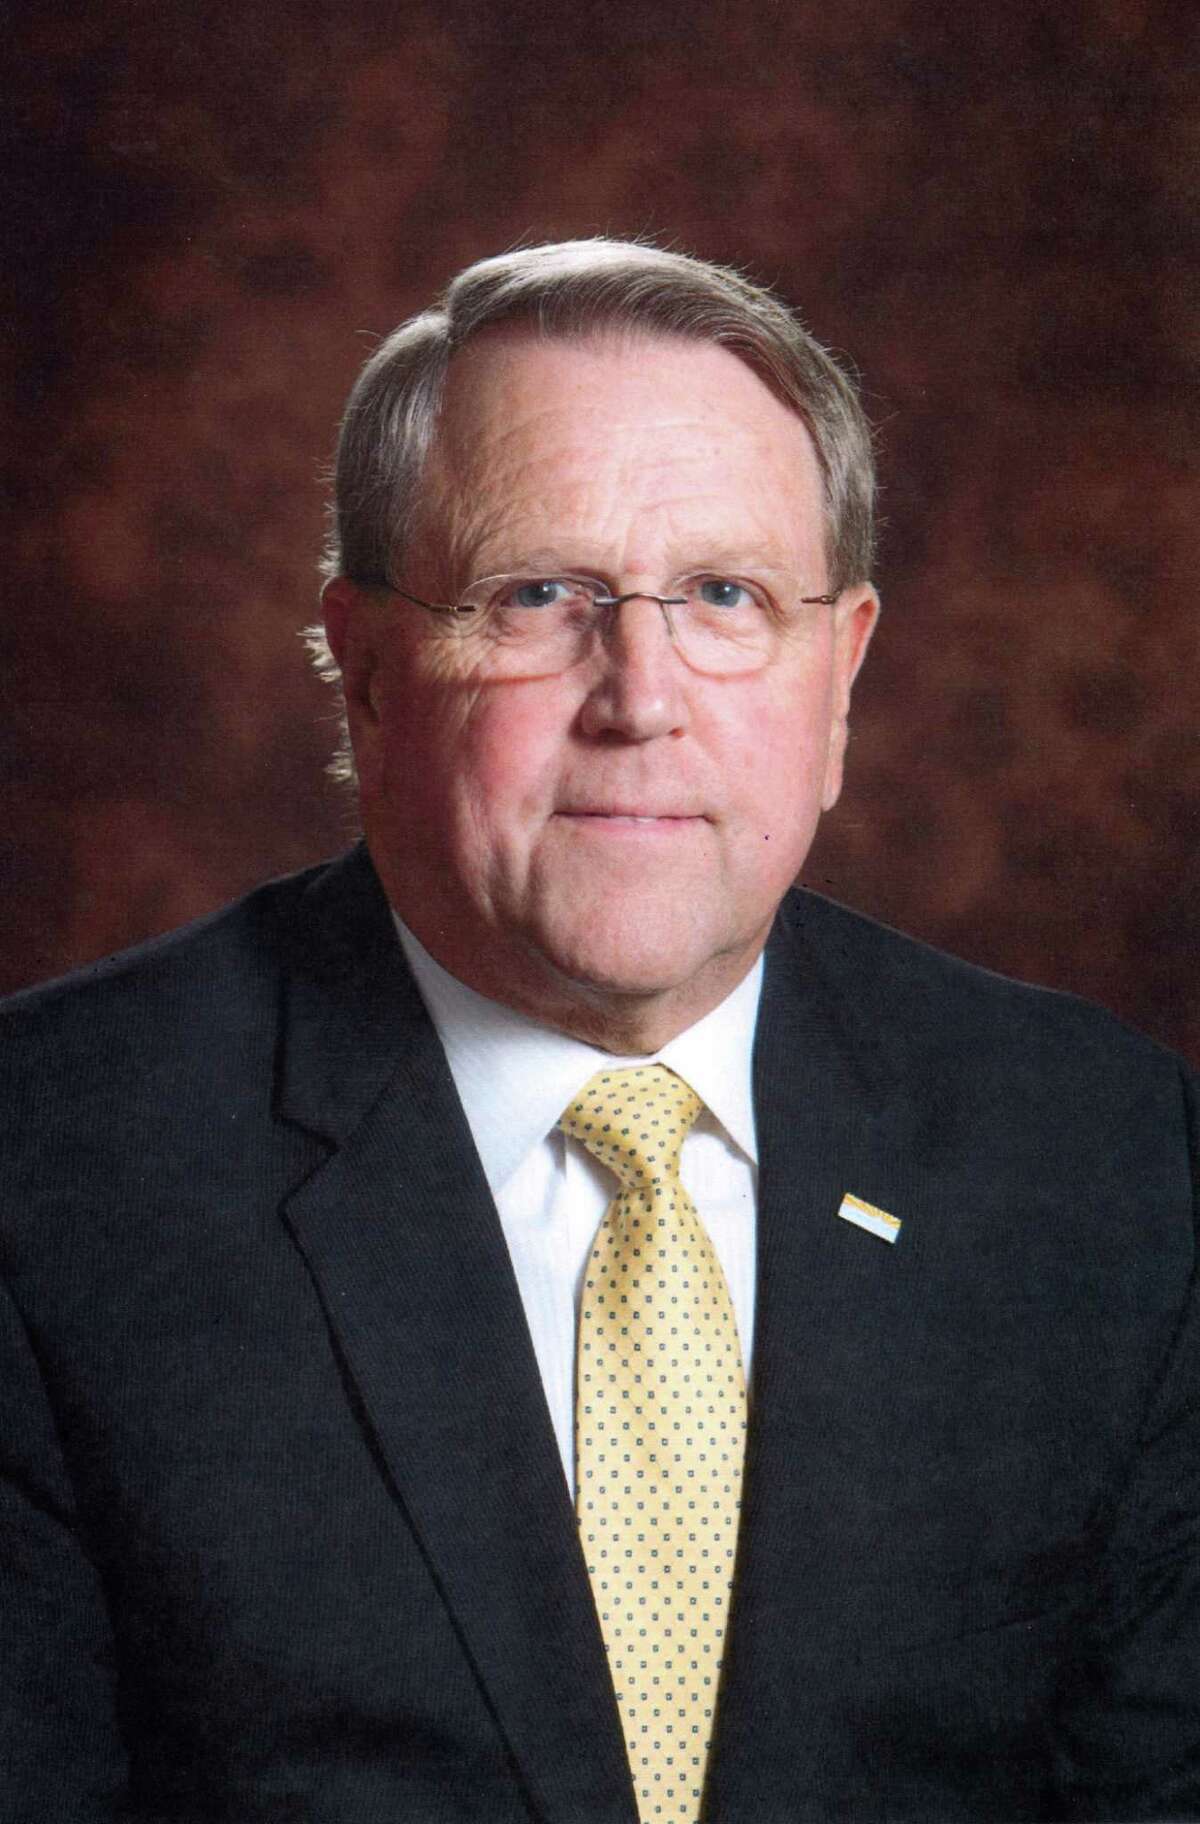 Missouri City Mayor Allen Owen